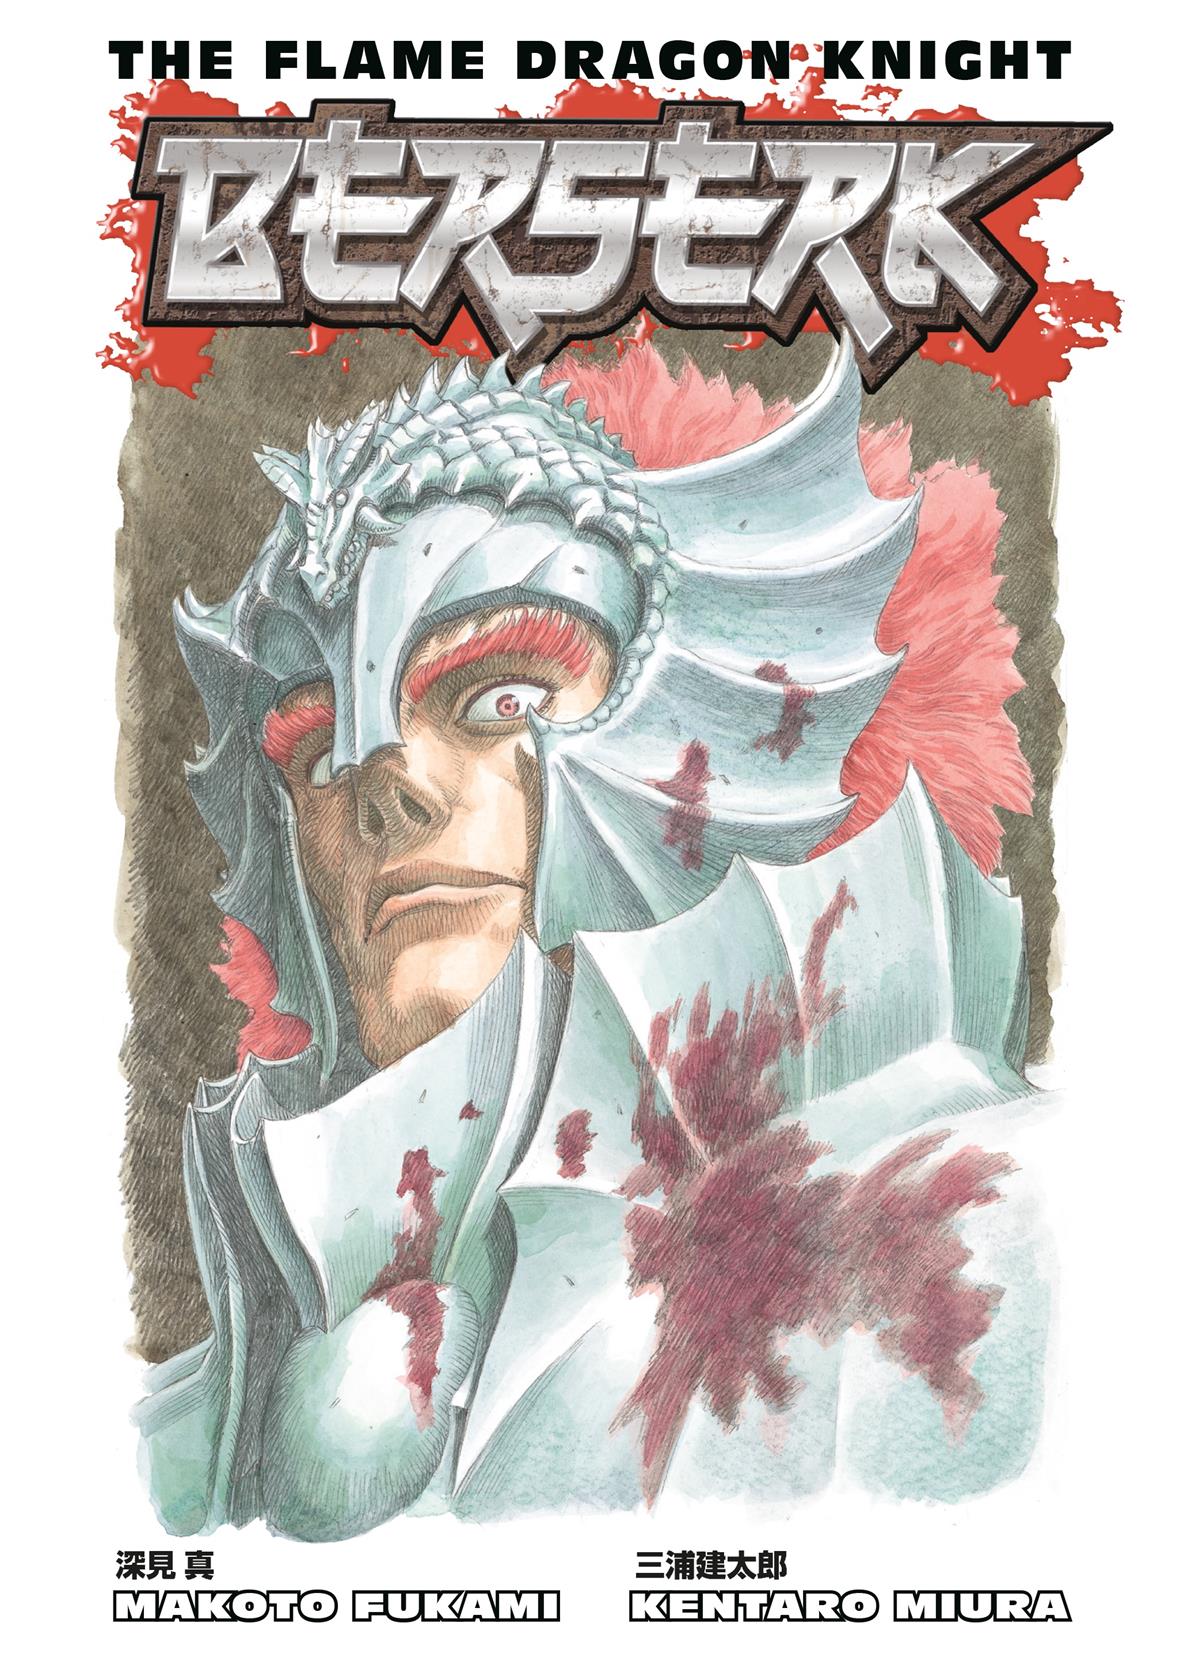 Berserk Deluxe (Dark Horse Comics) - Vol 1 to 5, Hobbies & Toys, Books &  Magazines, Comics & Manga on Carousell